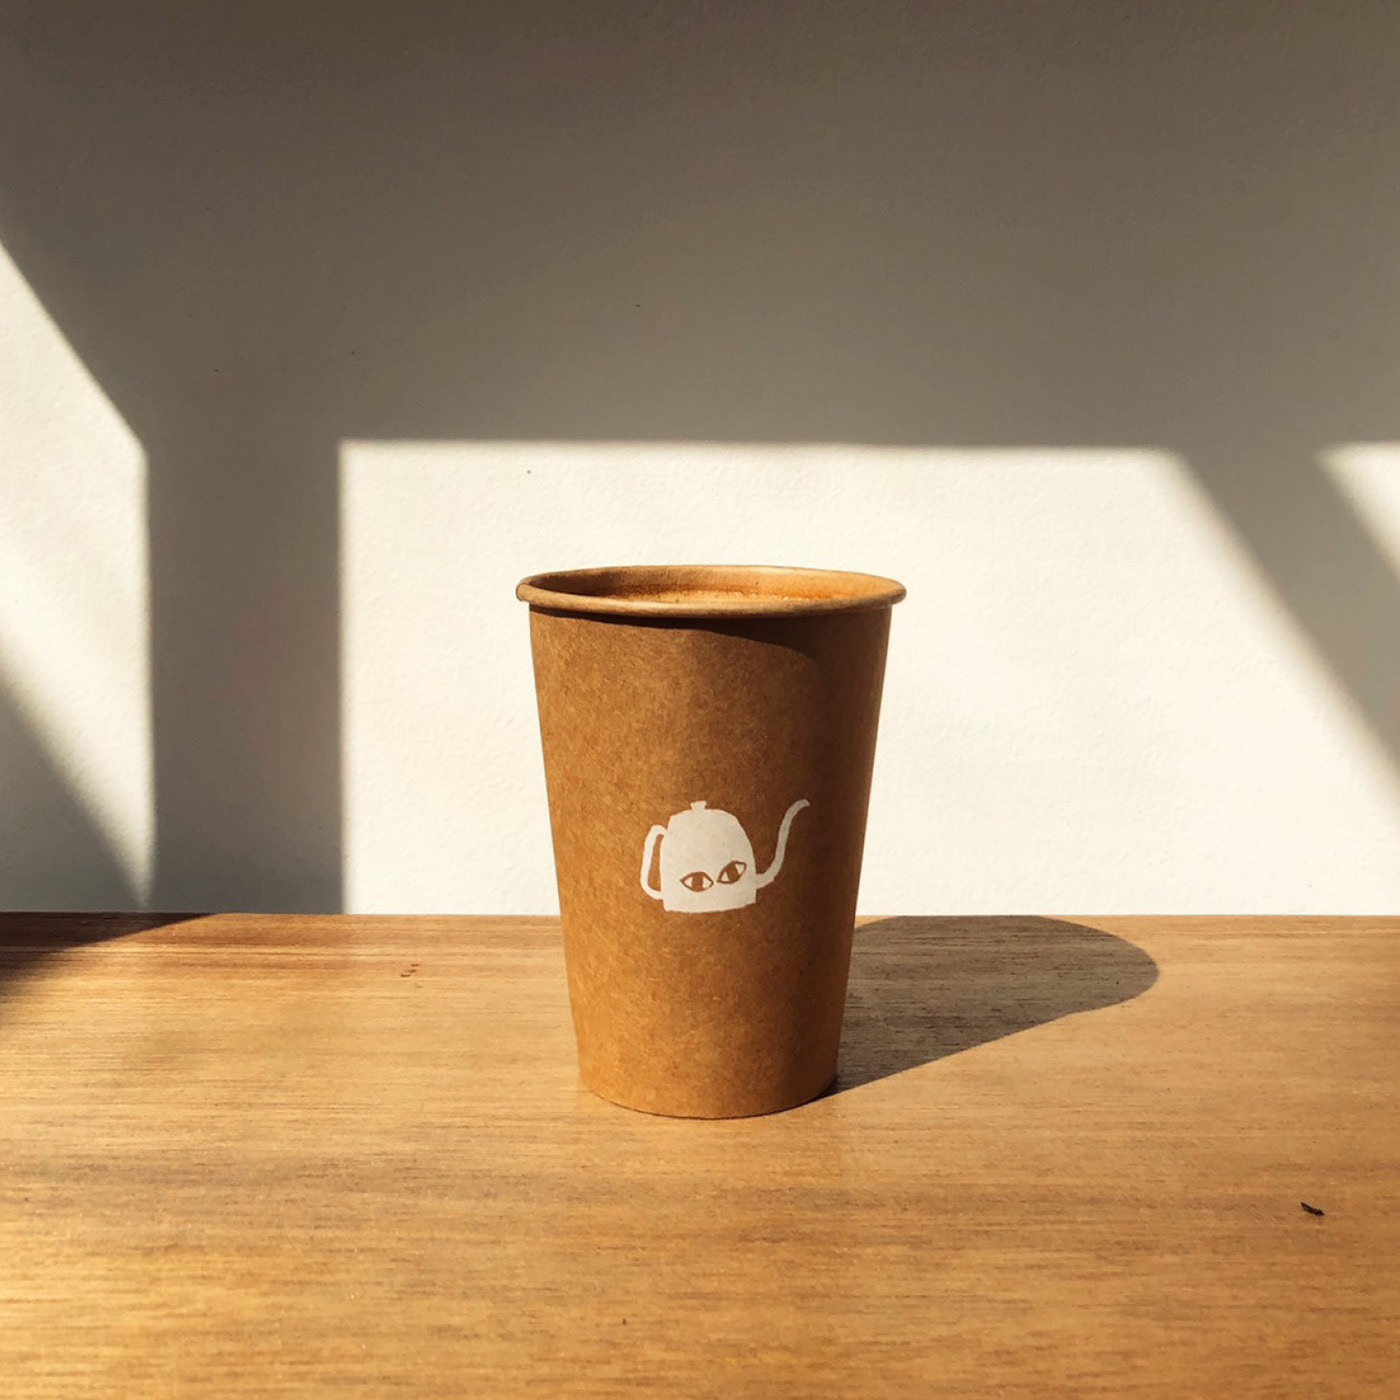 Kyō咖啡馆咖啡杯设计